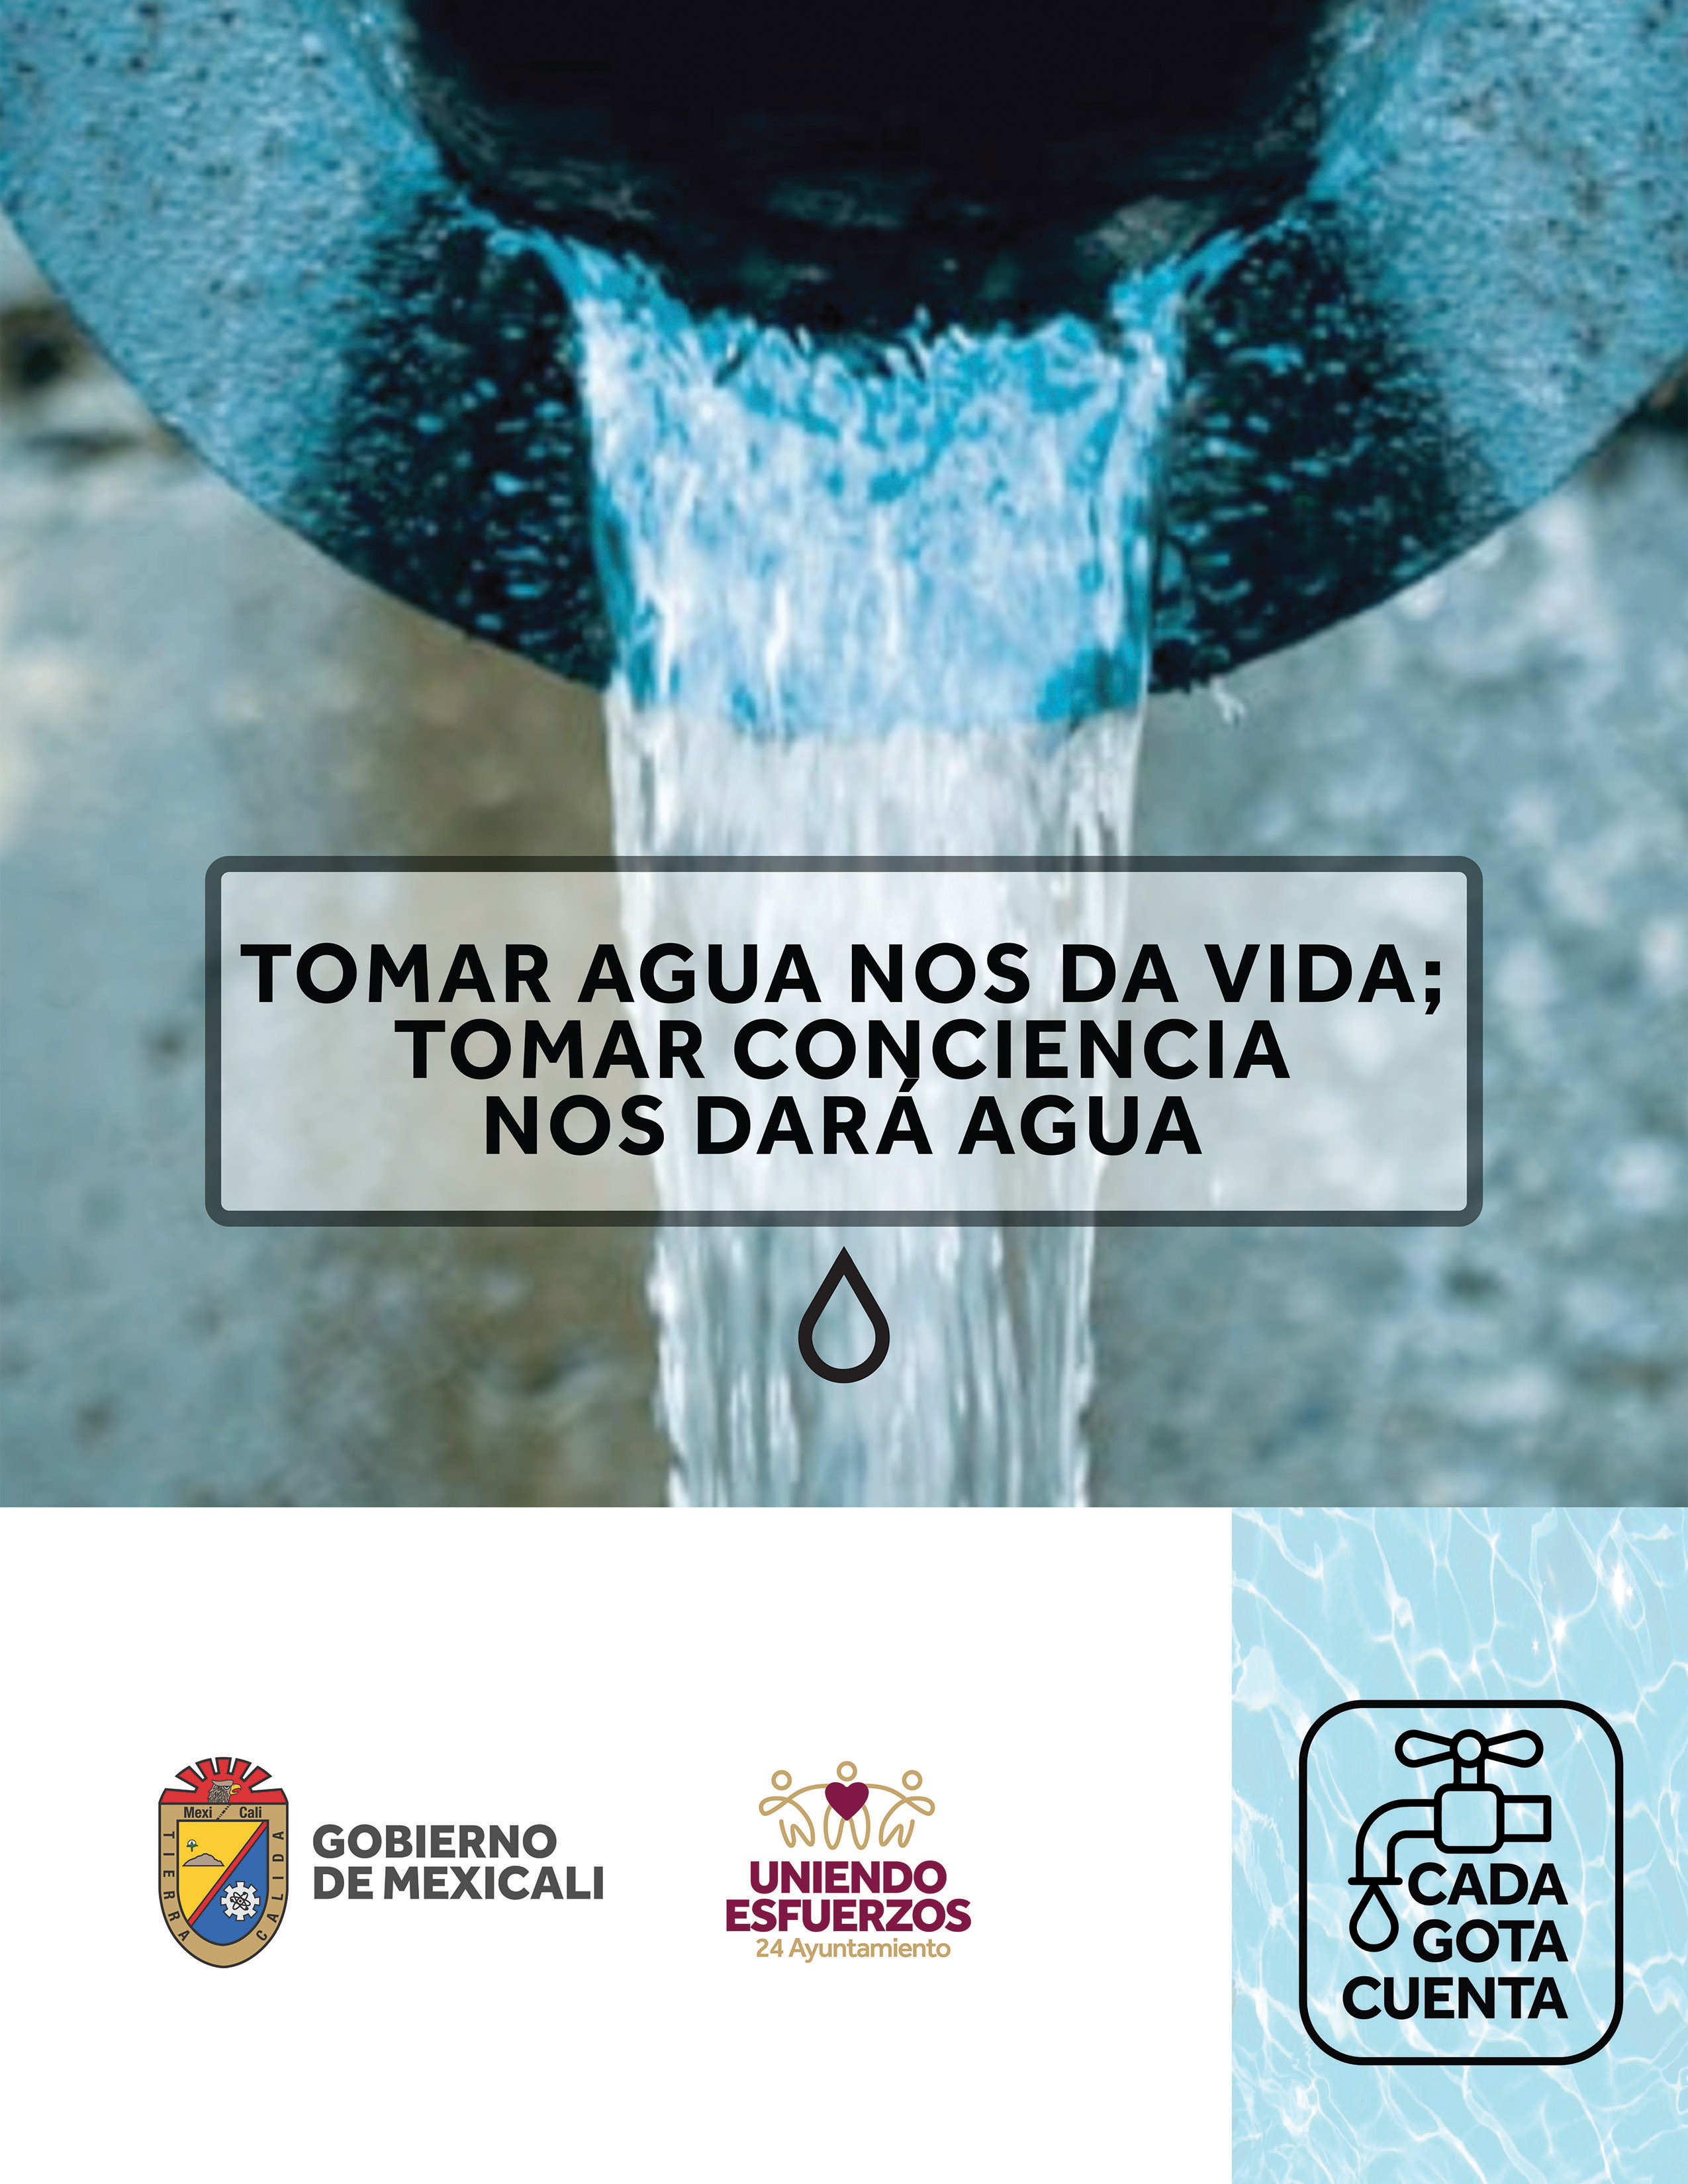 Gobierno de Mexicali: A cuidar el agua